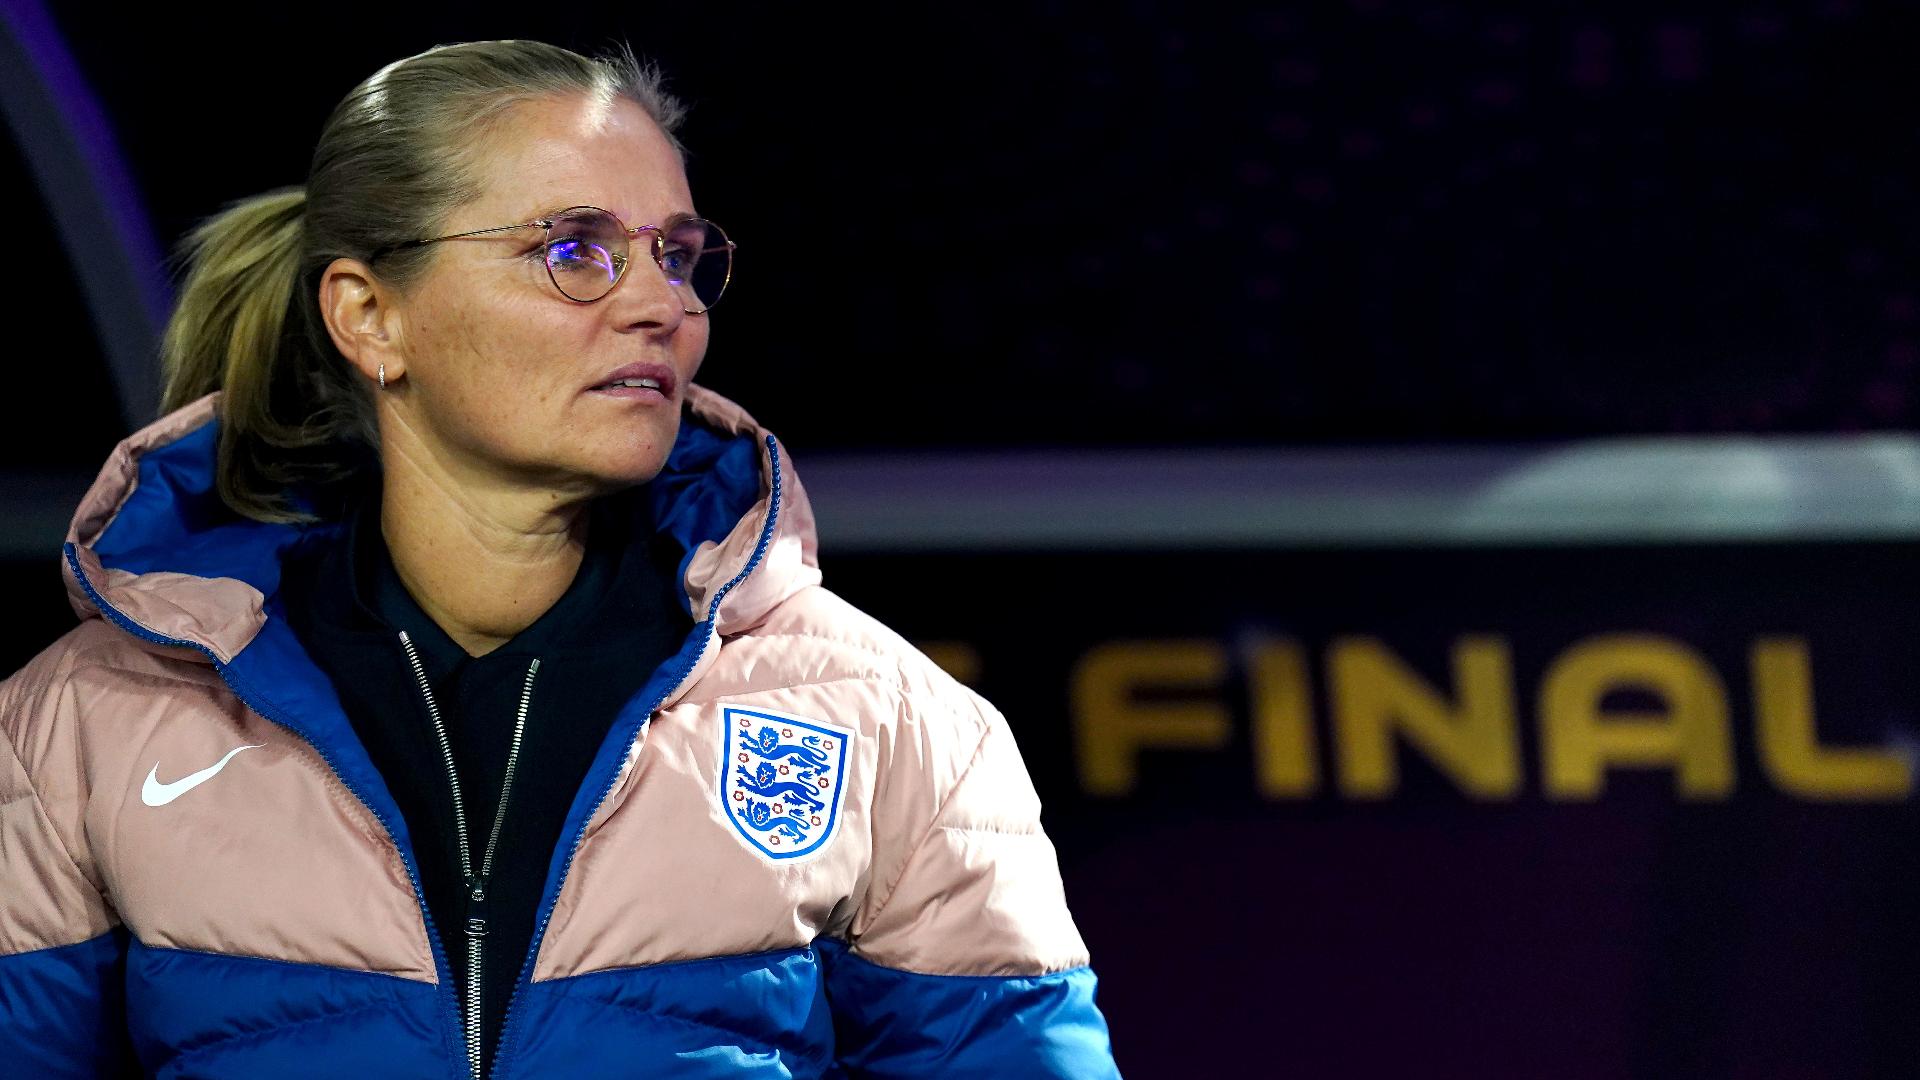 England boss Sarina Wiegman: The issues around the Spanish team really hurts me